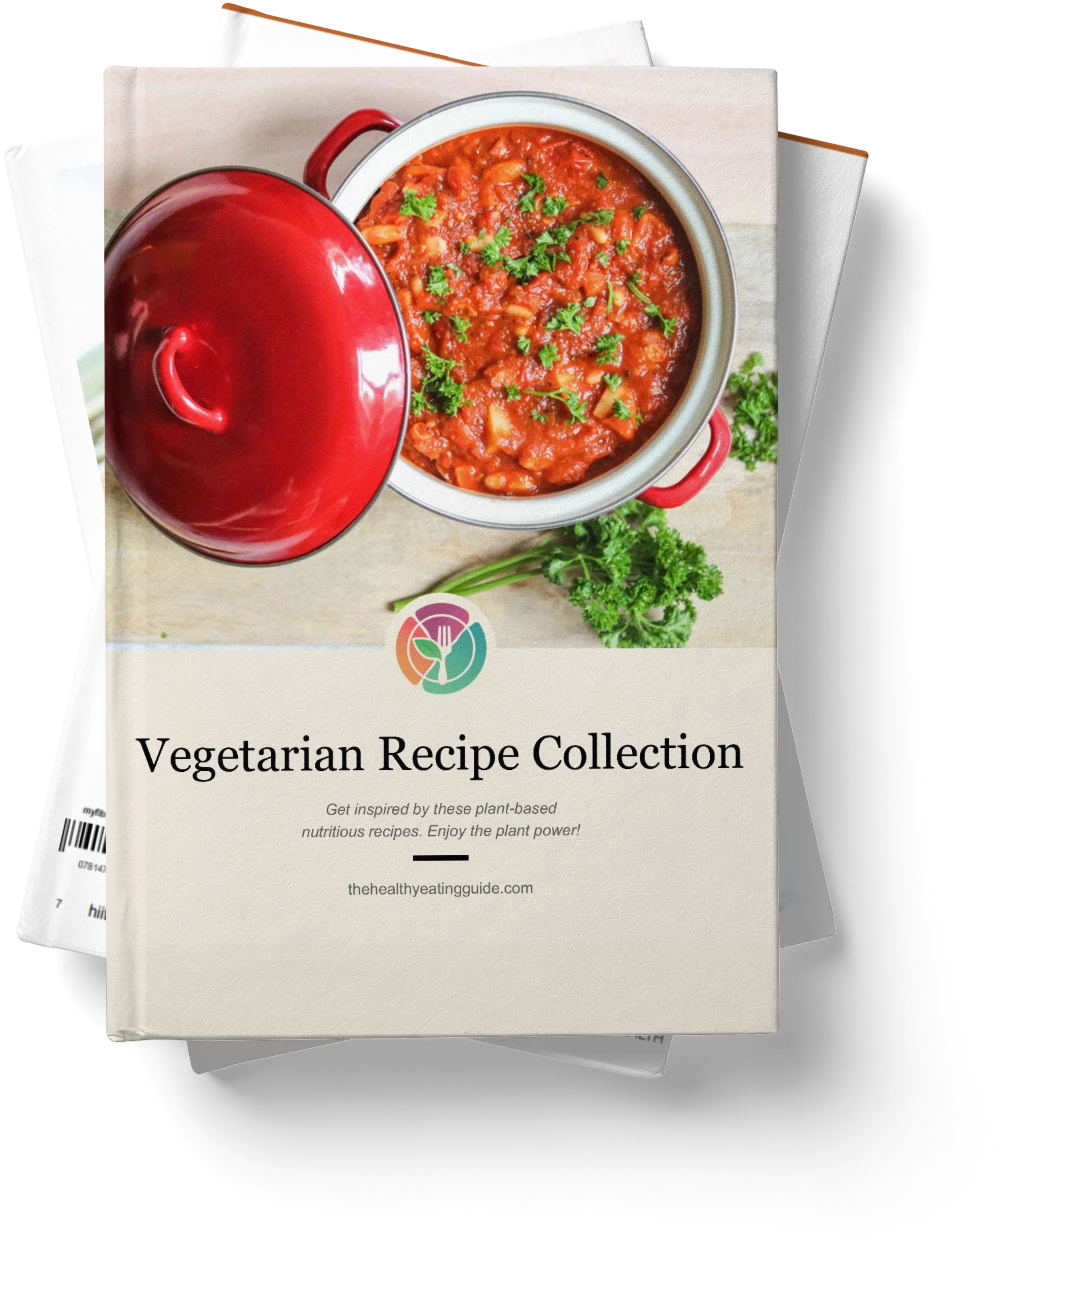 Vegetarian Recipe Pack hard cover book stack